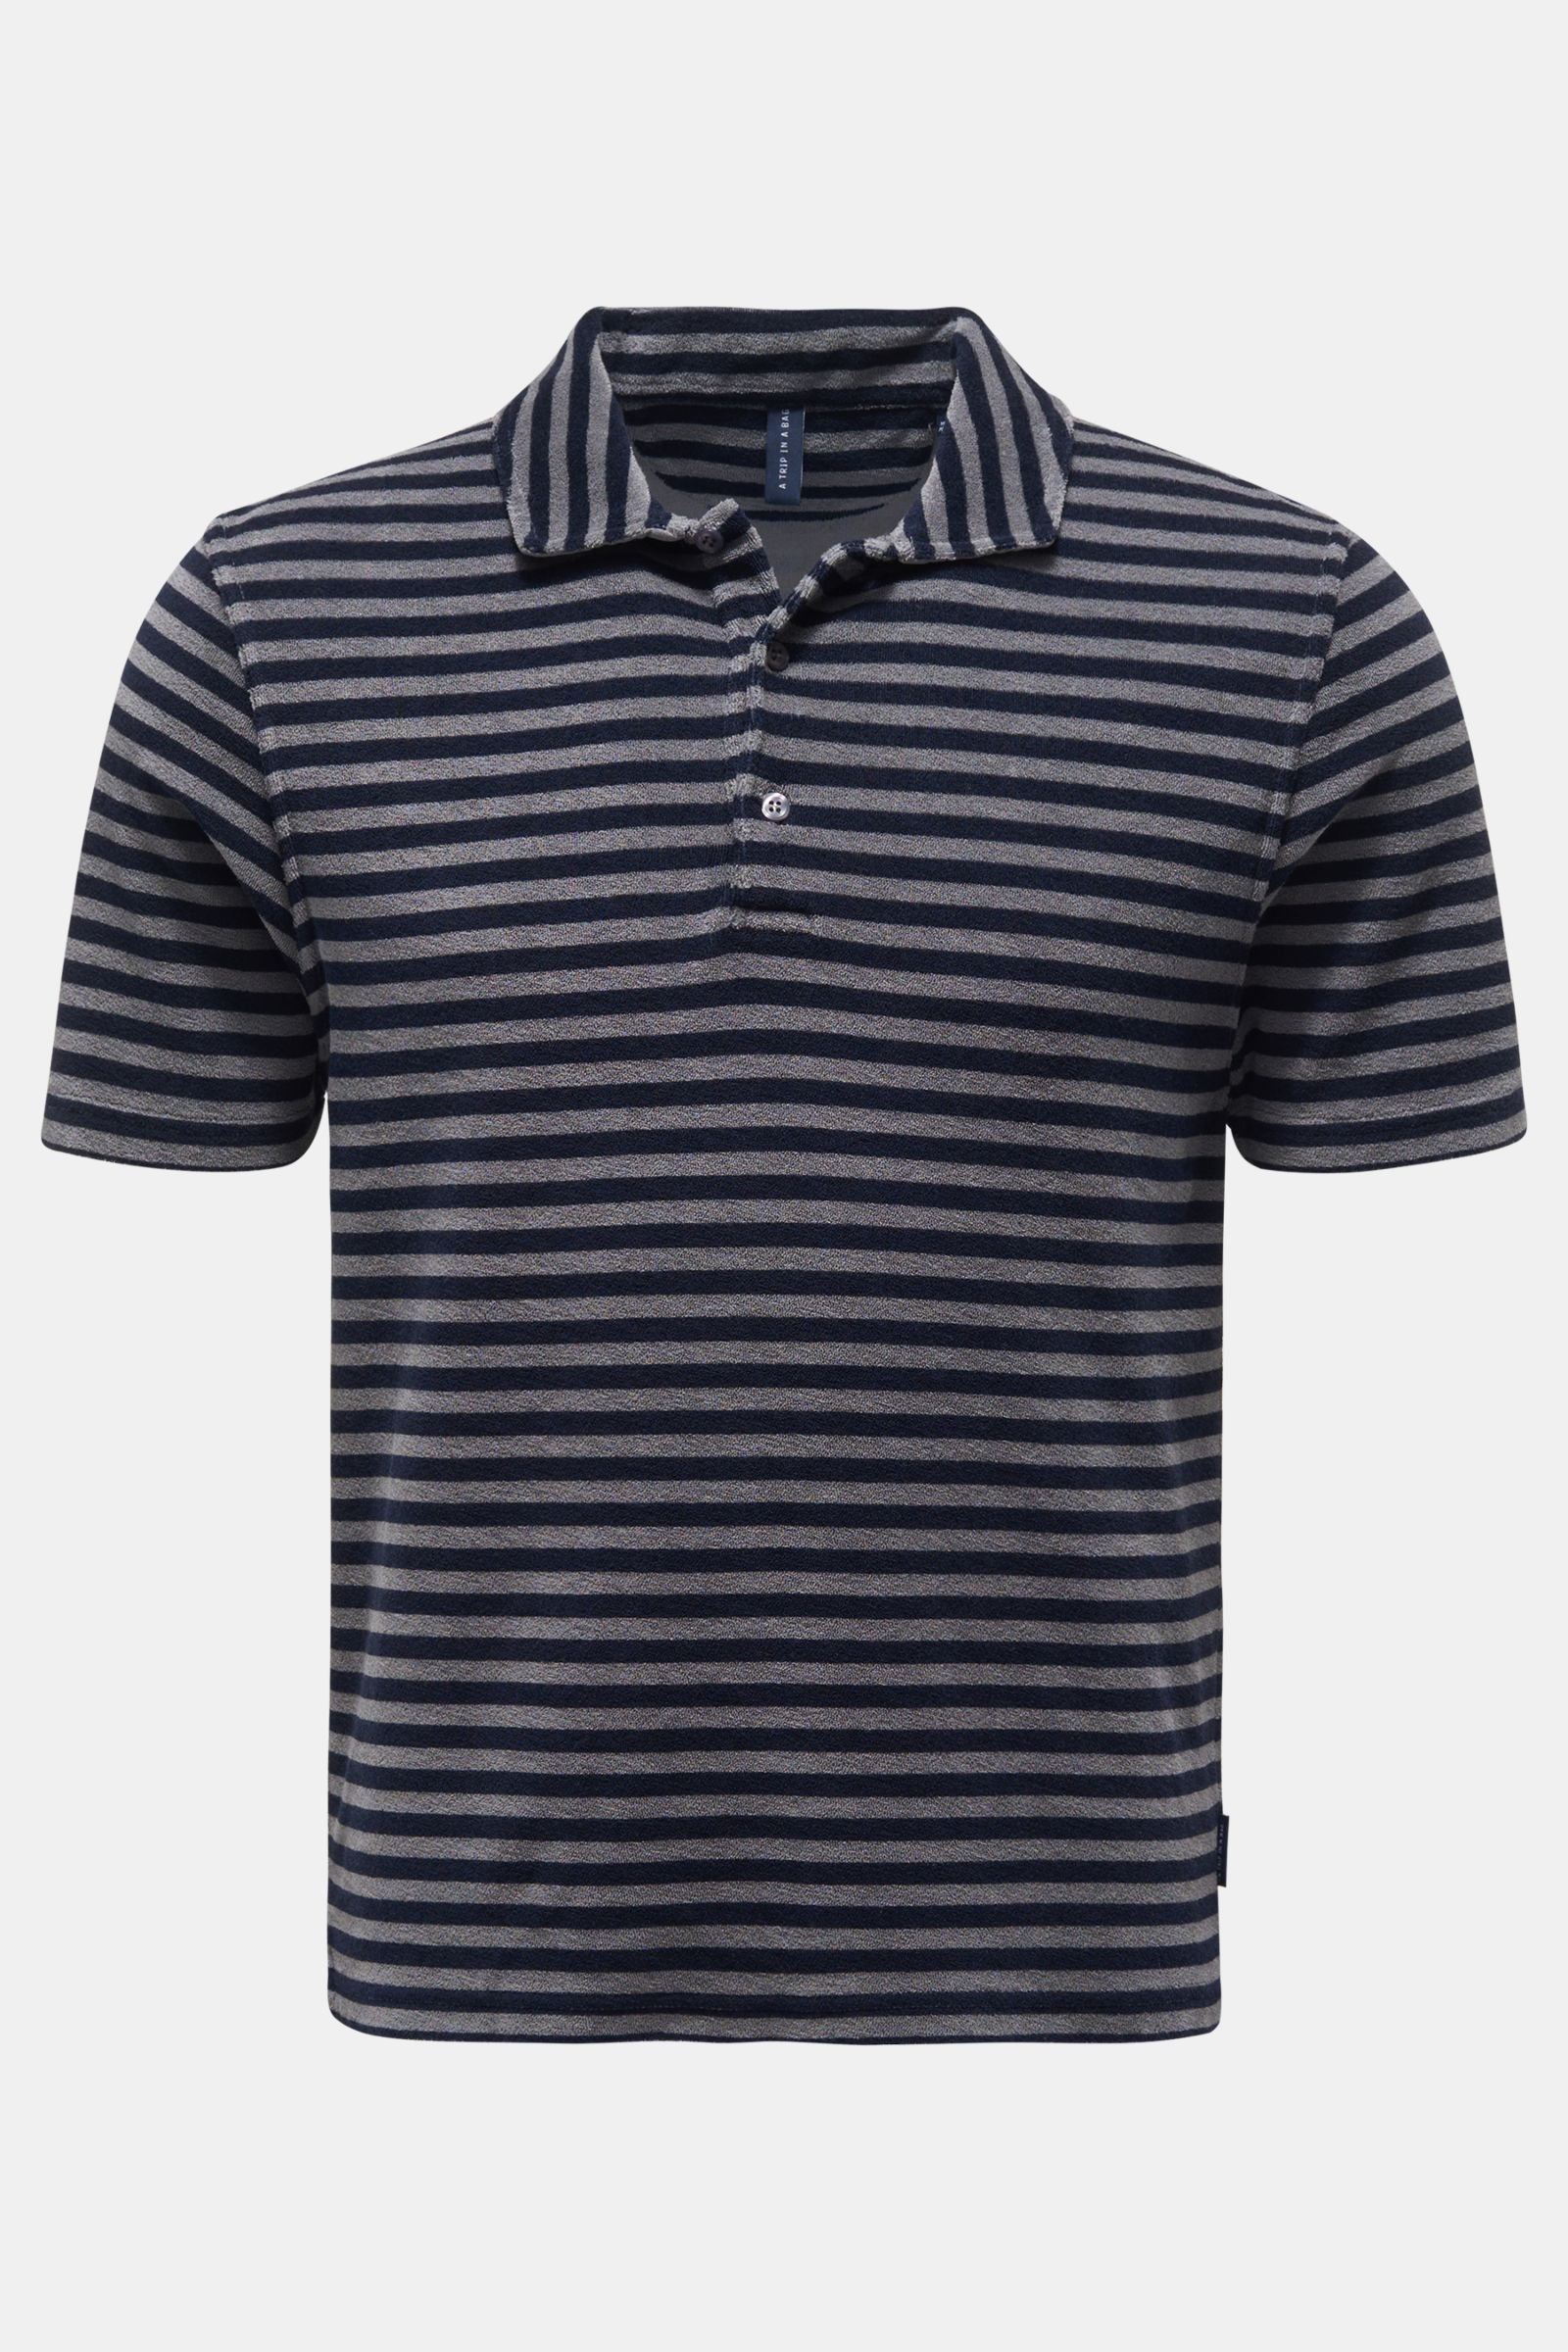 Terry polo shirt 'Terry Stripe Polo' grey/navy striped